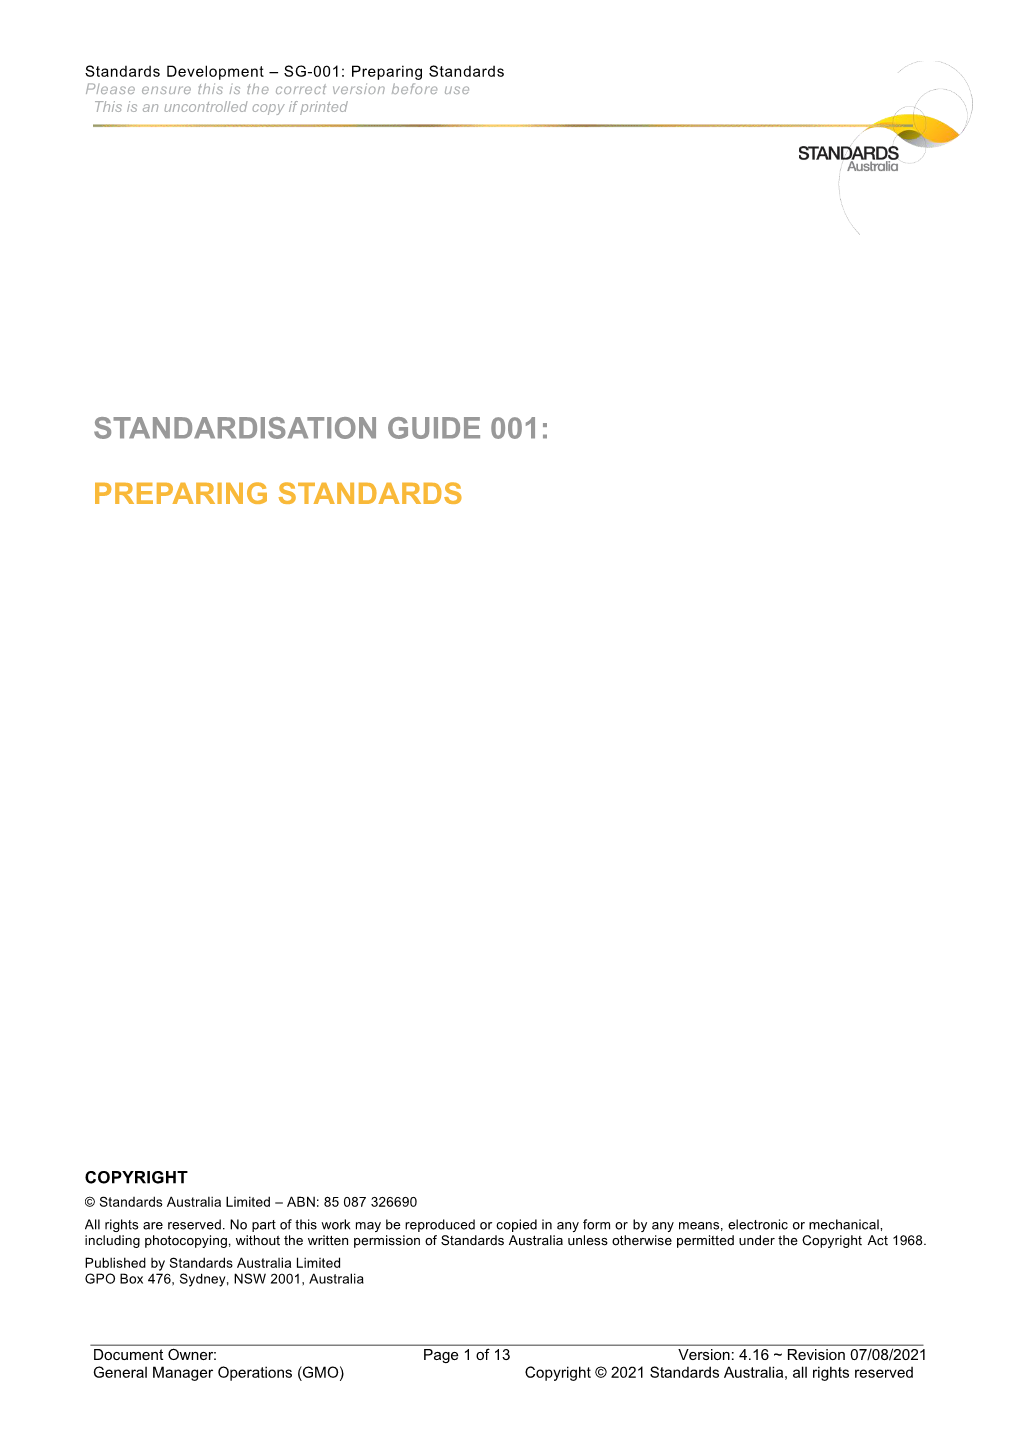 SG-001 Preparing Standards